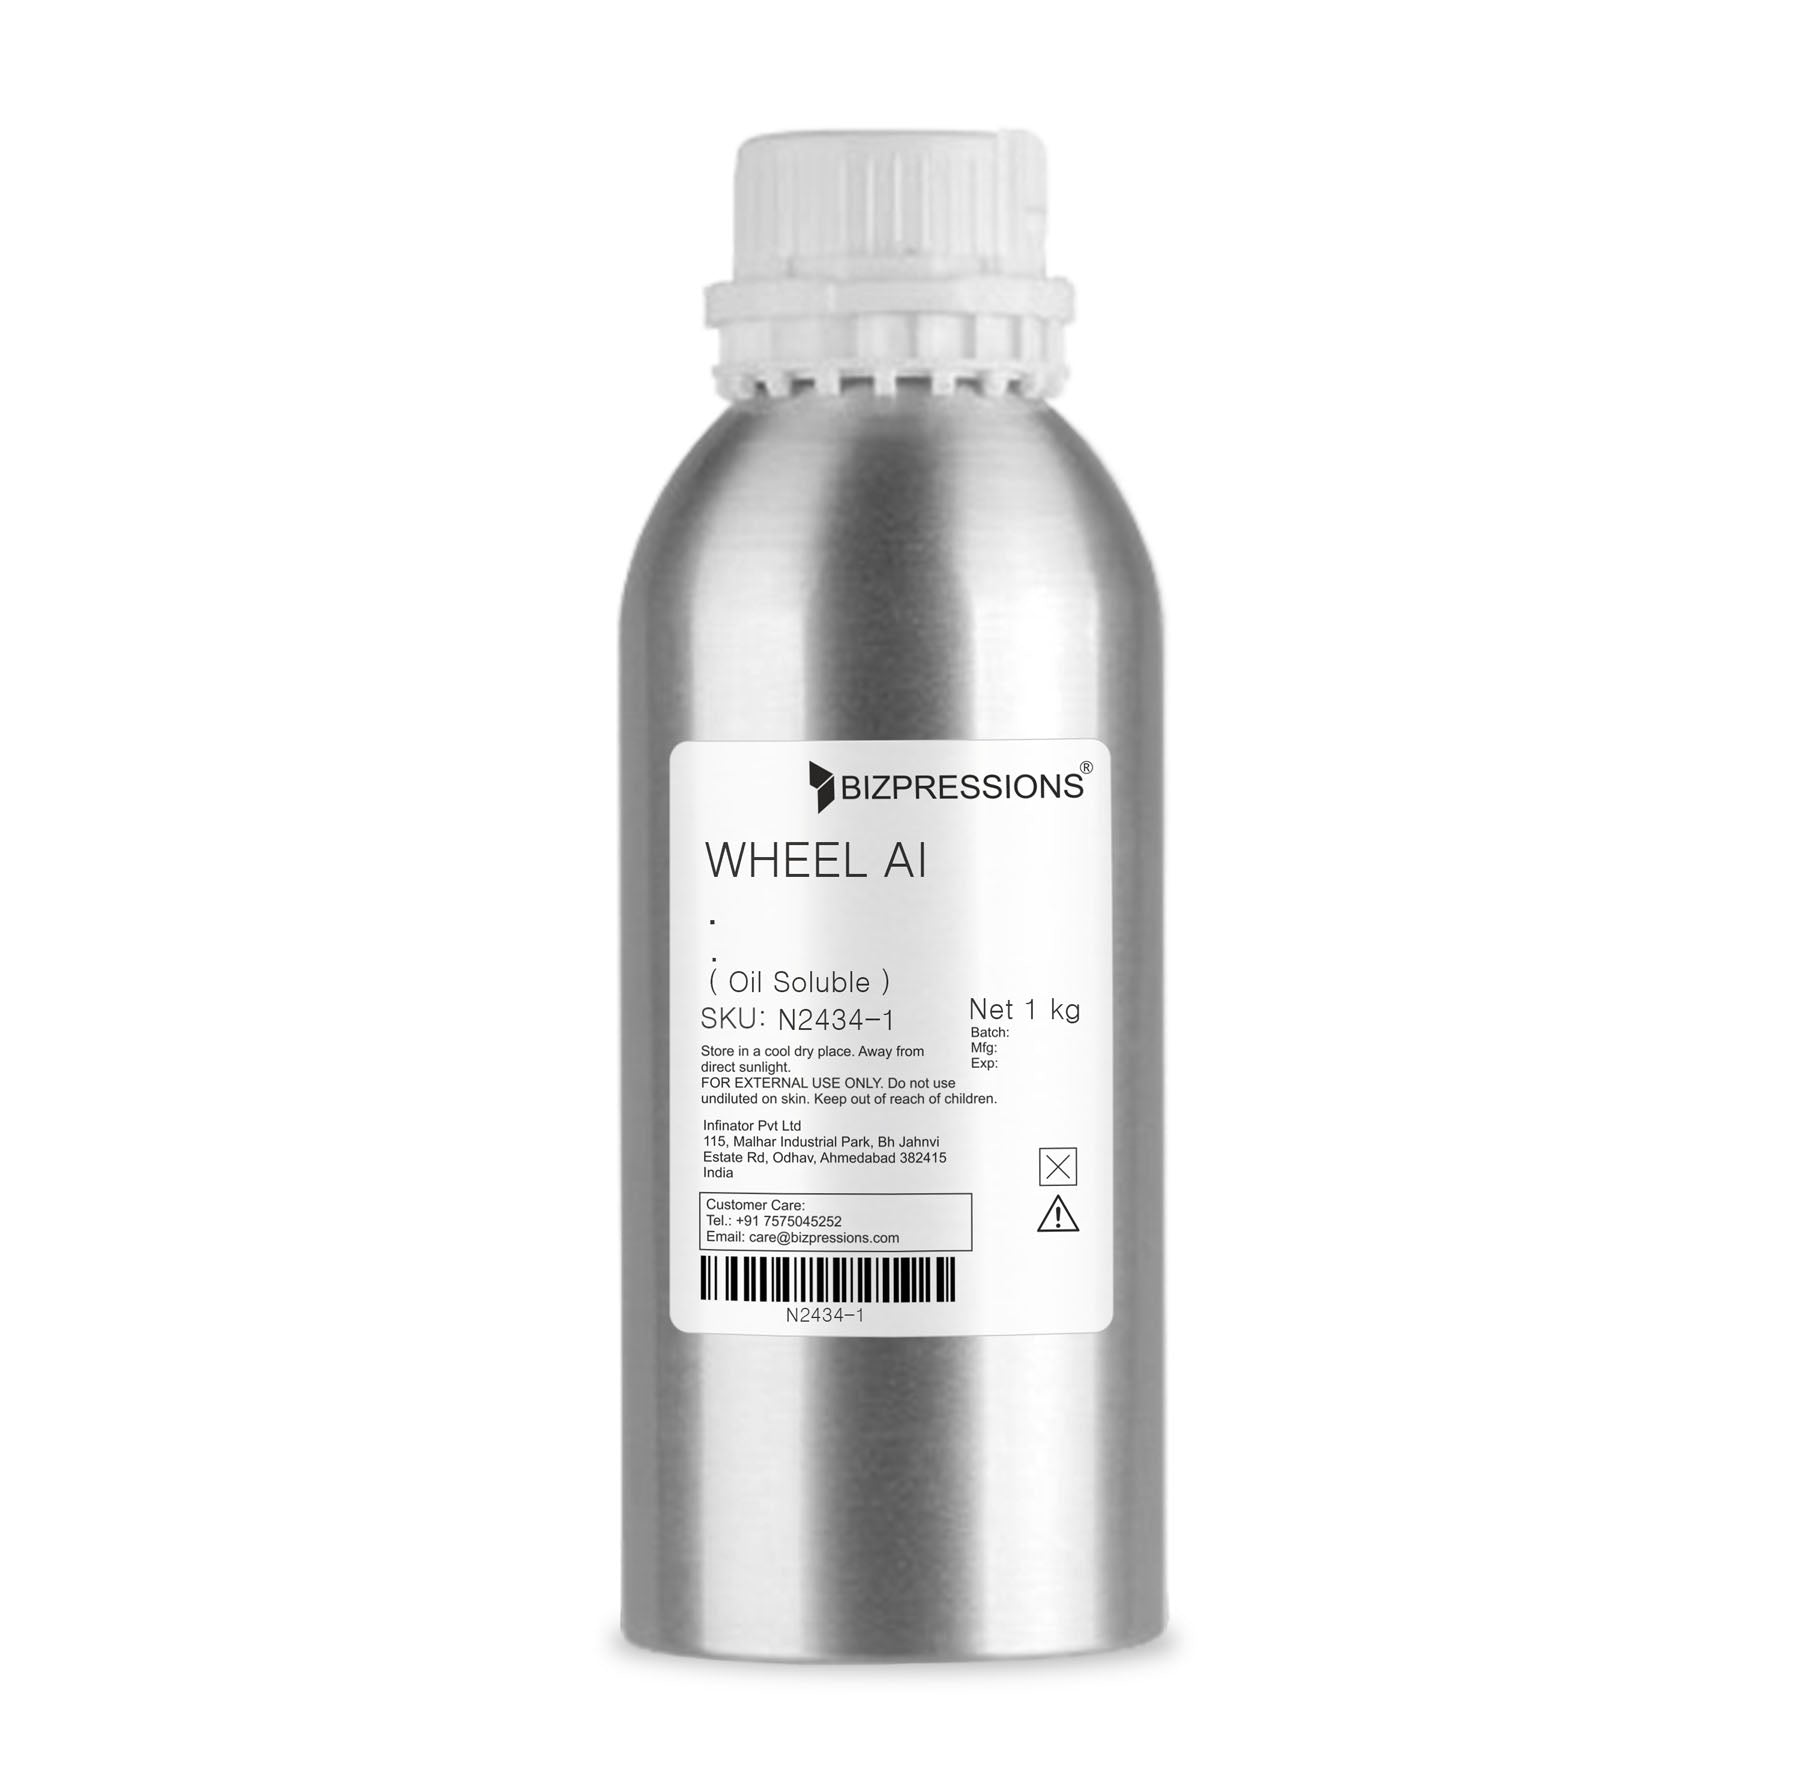 WHEEL AI - Fragrance ( Oil Soluble ) - 1 kg